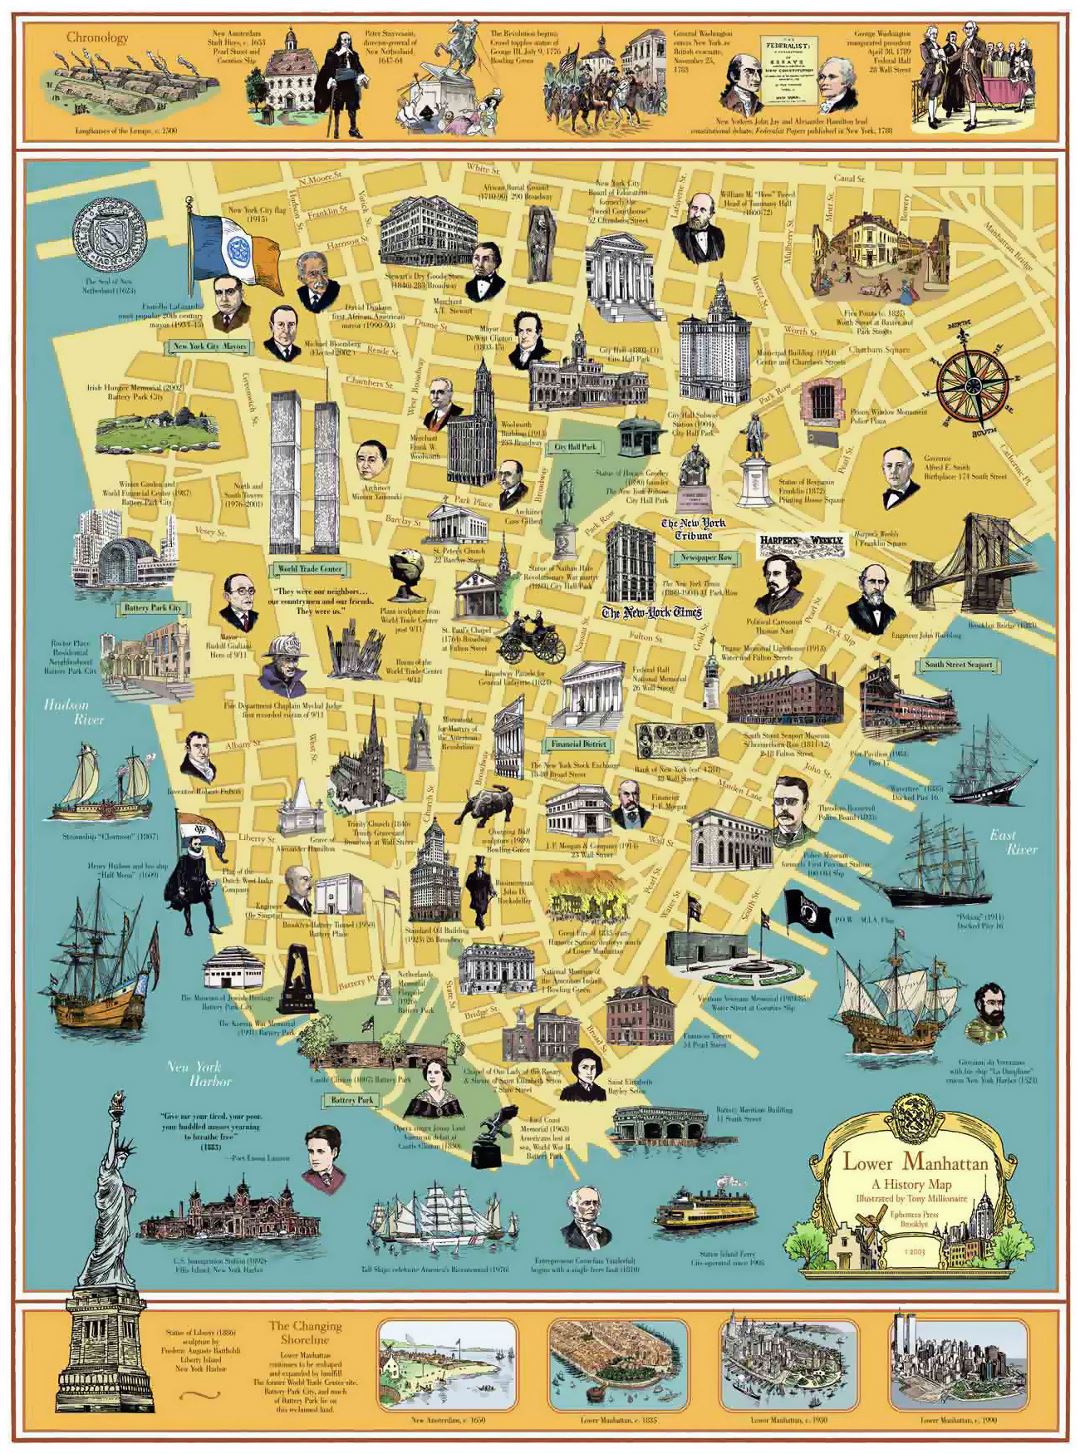 History map of Lower Manhattan, NYC